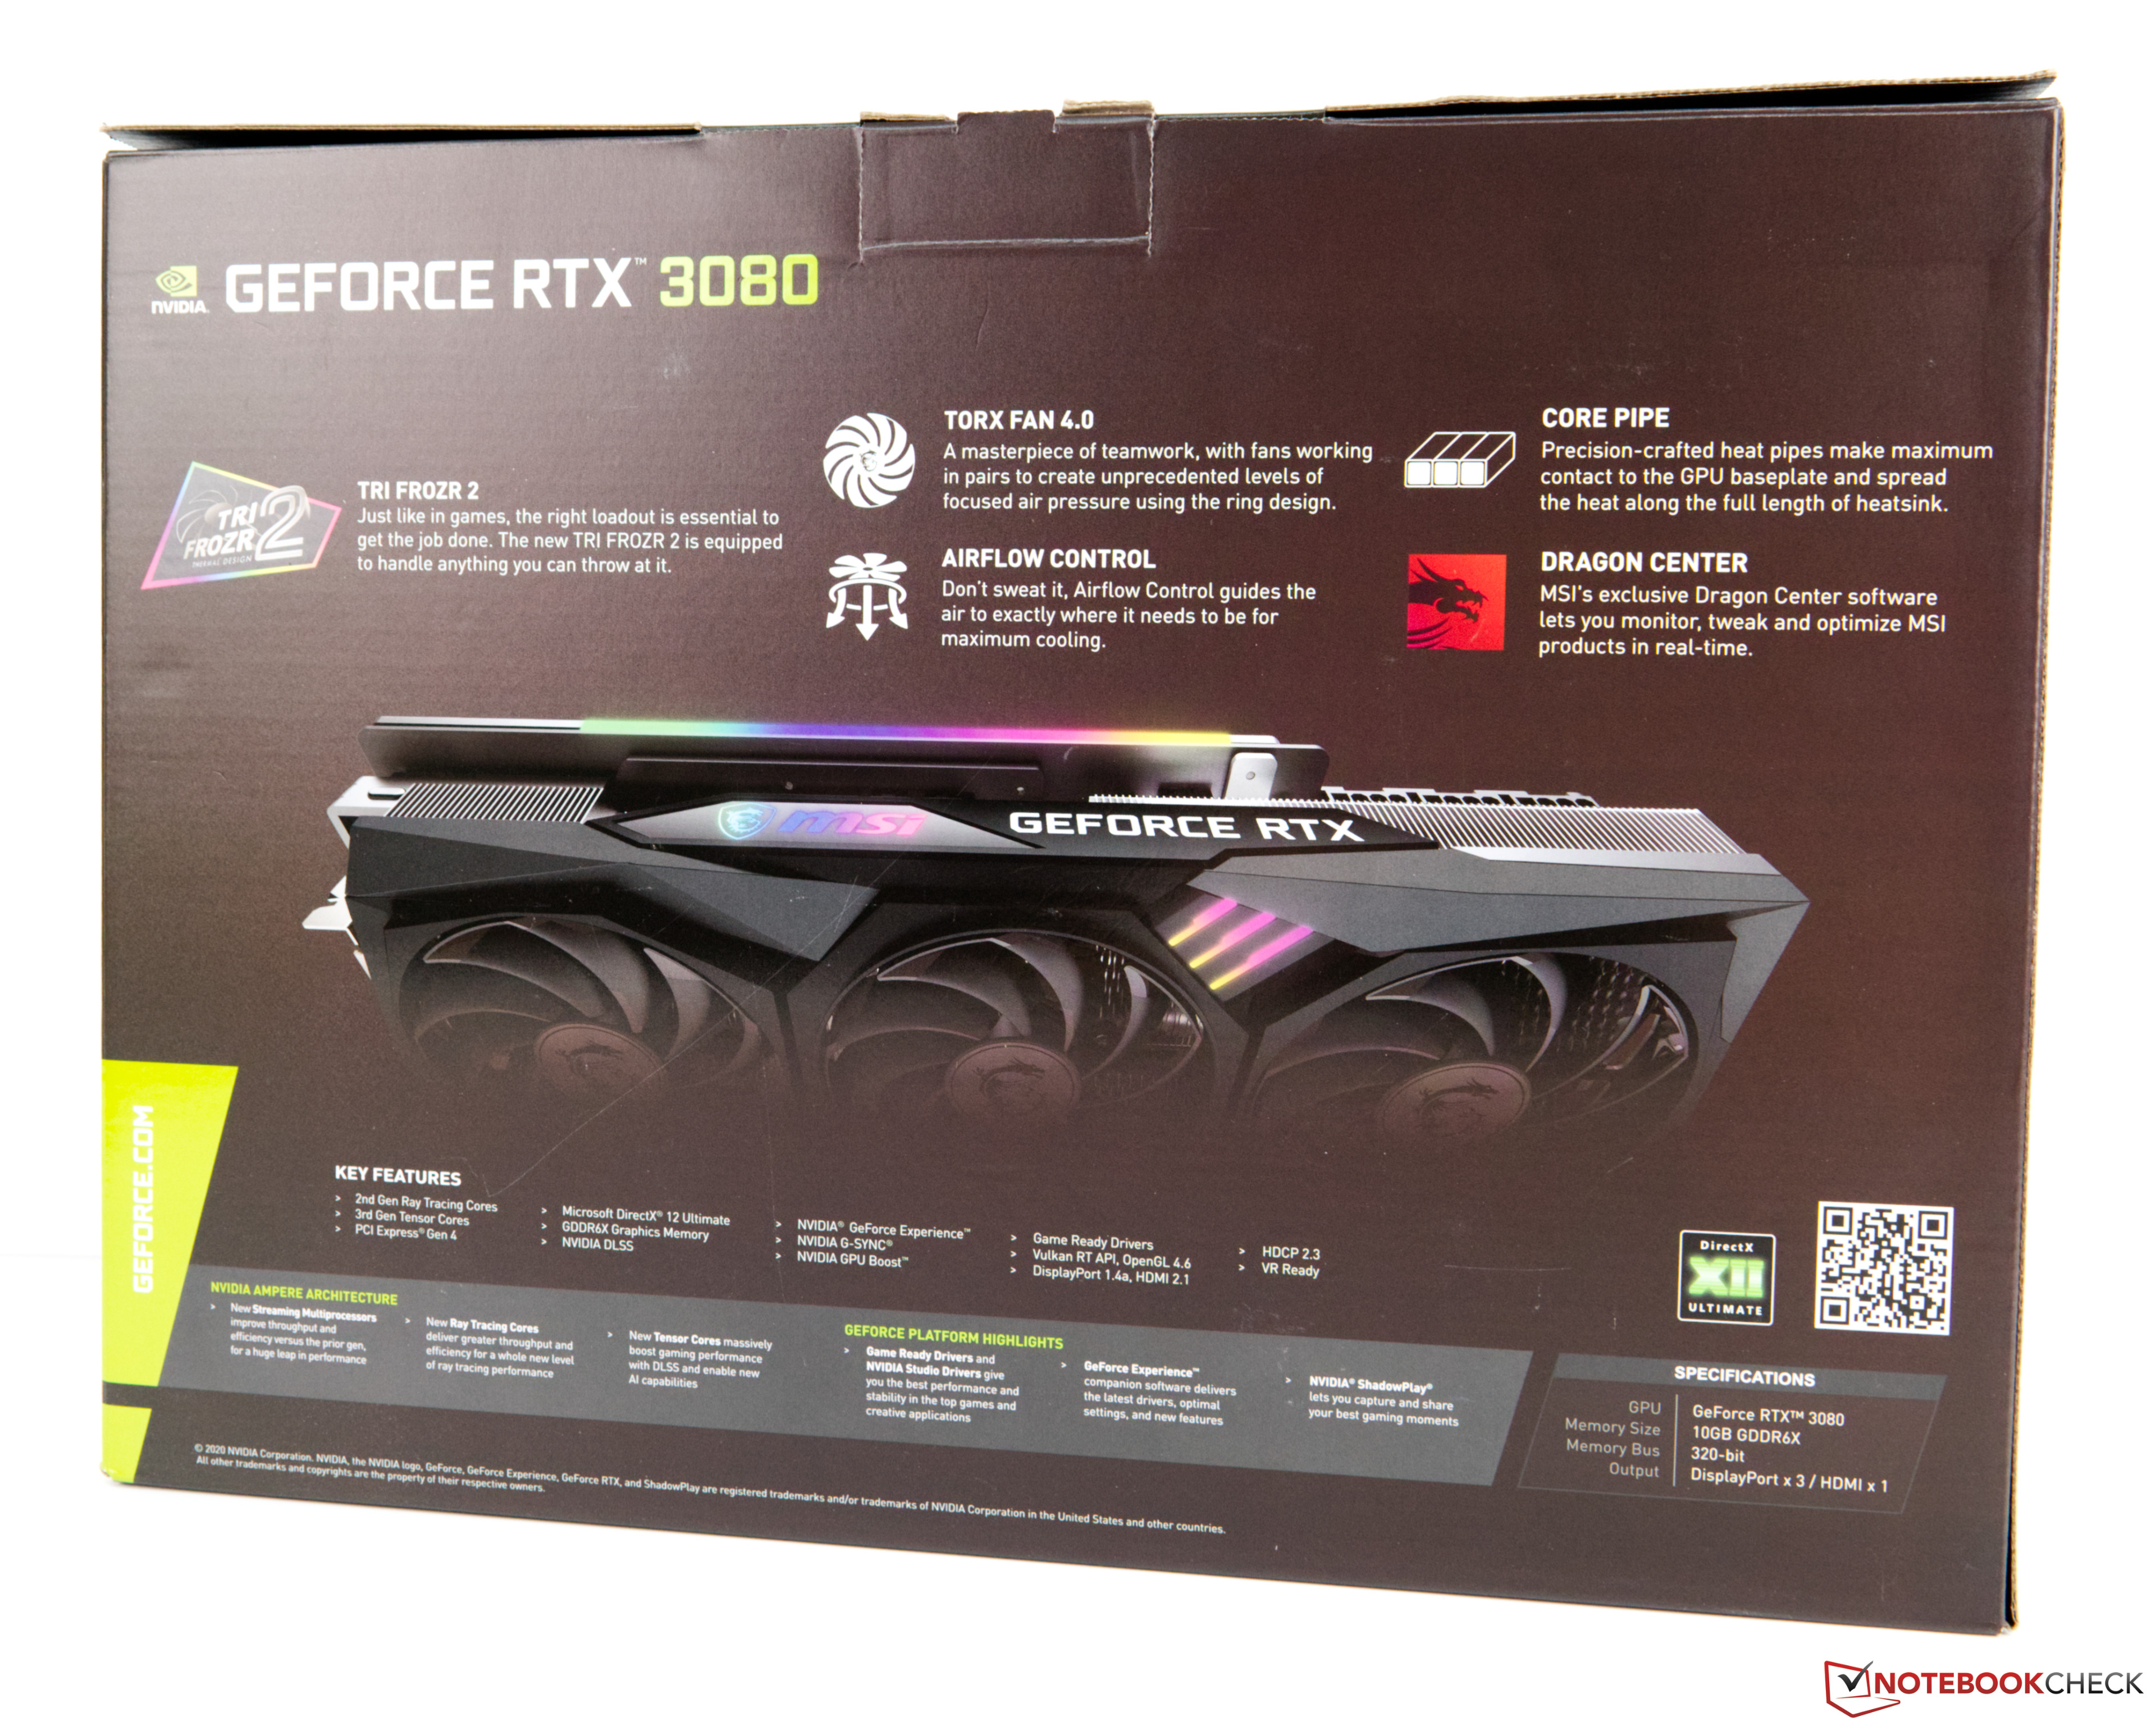 MSI GeForce RTX 3080 Gaming X Trio 10G desktop graphics card in 